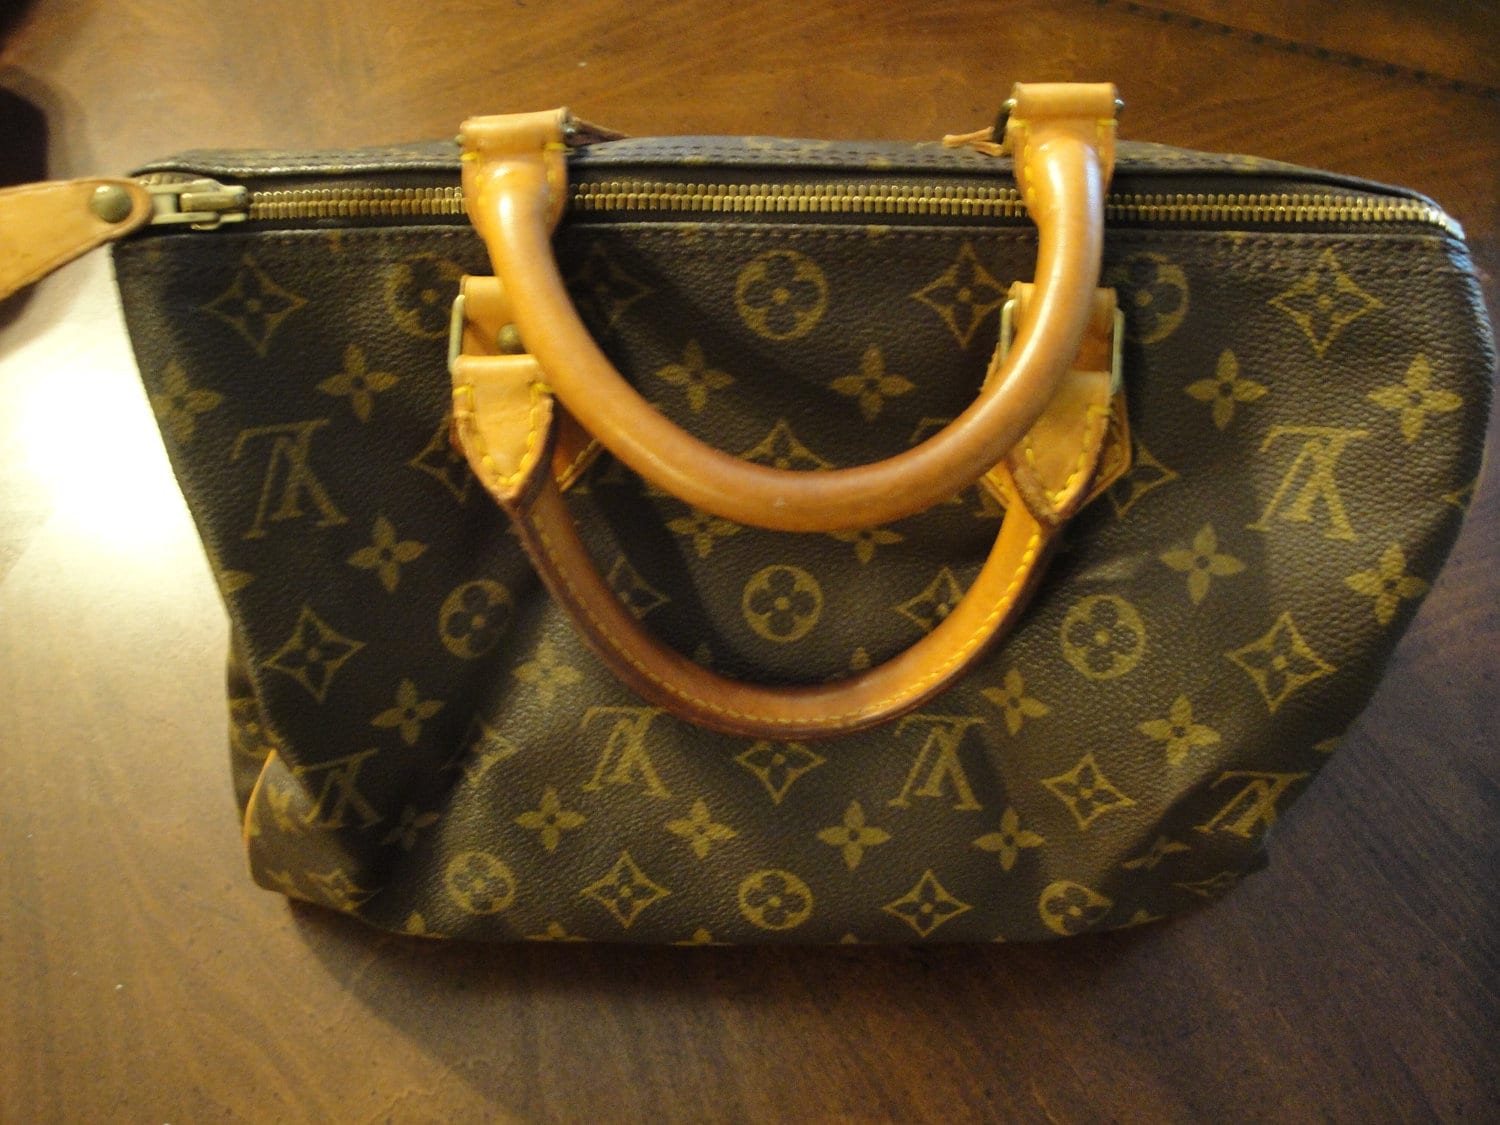 Vintage Louis Vuitton Purse / Handbag by JKDoodle on Etsy